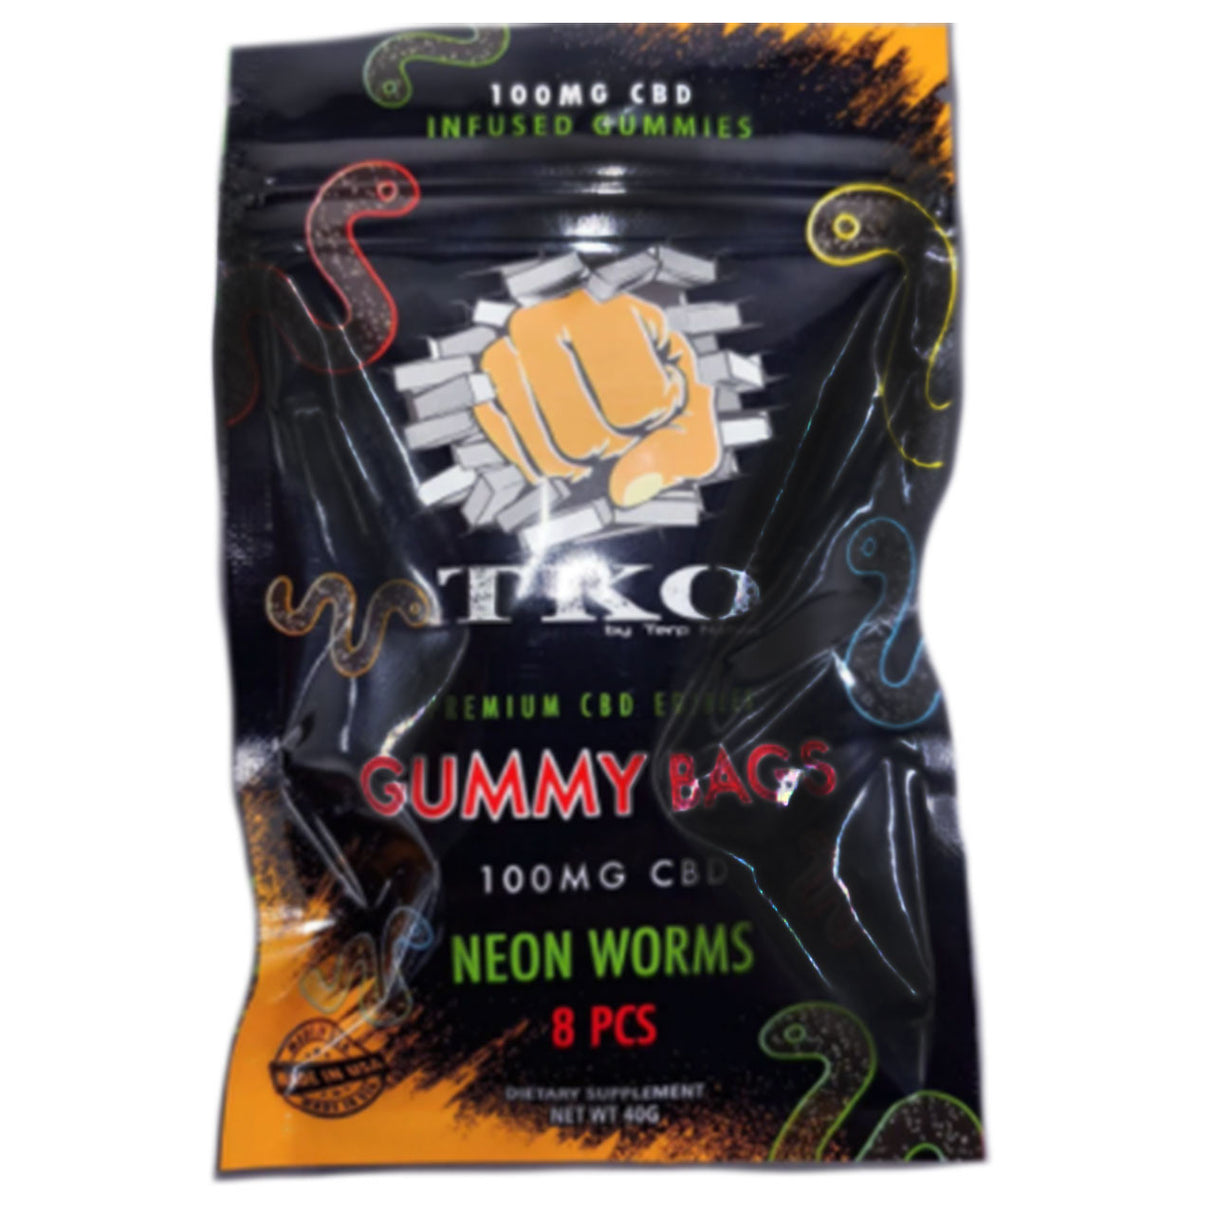 TKO Premium CBD Edibles 8 neon worms per bag at approx. 12.MG each